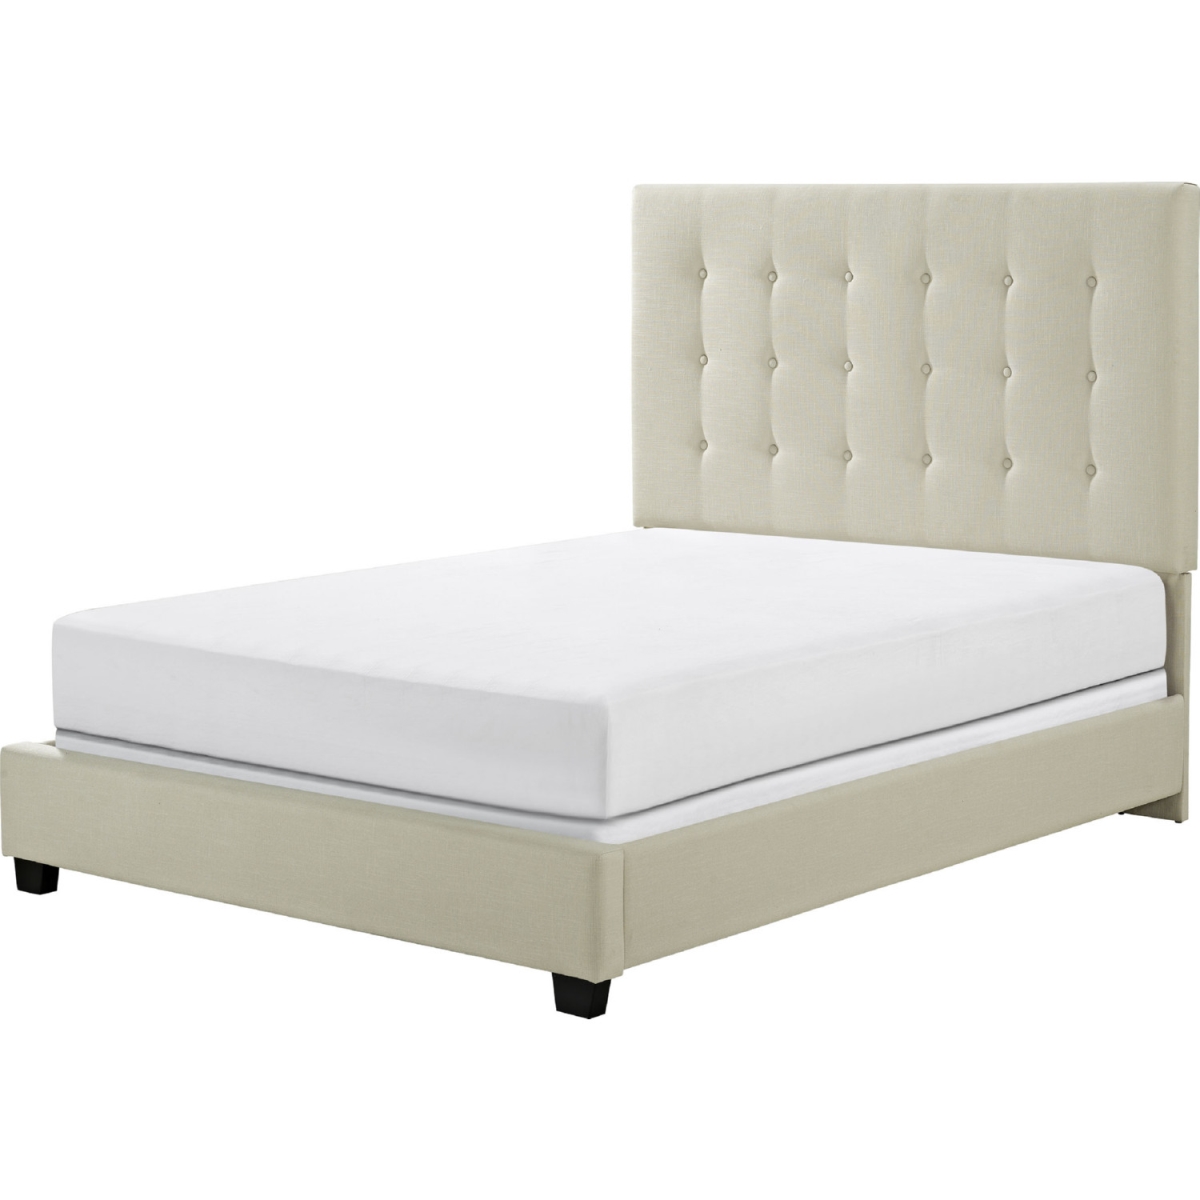 Kf705005cr Reston Square Upholstered Queen Bedset, Creme Linen